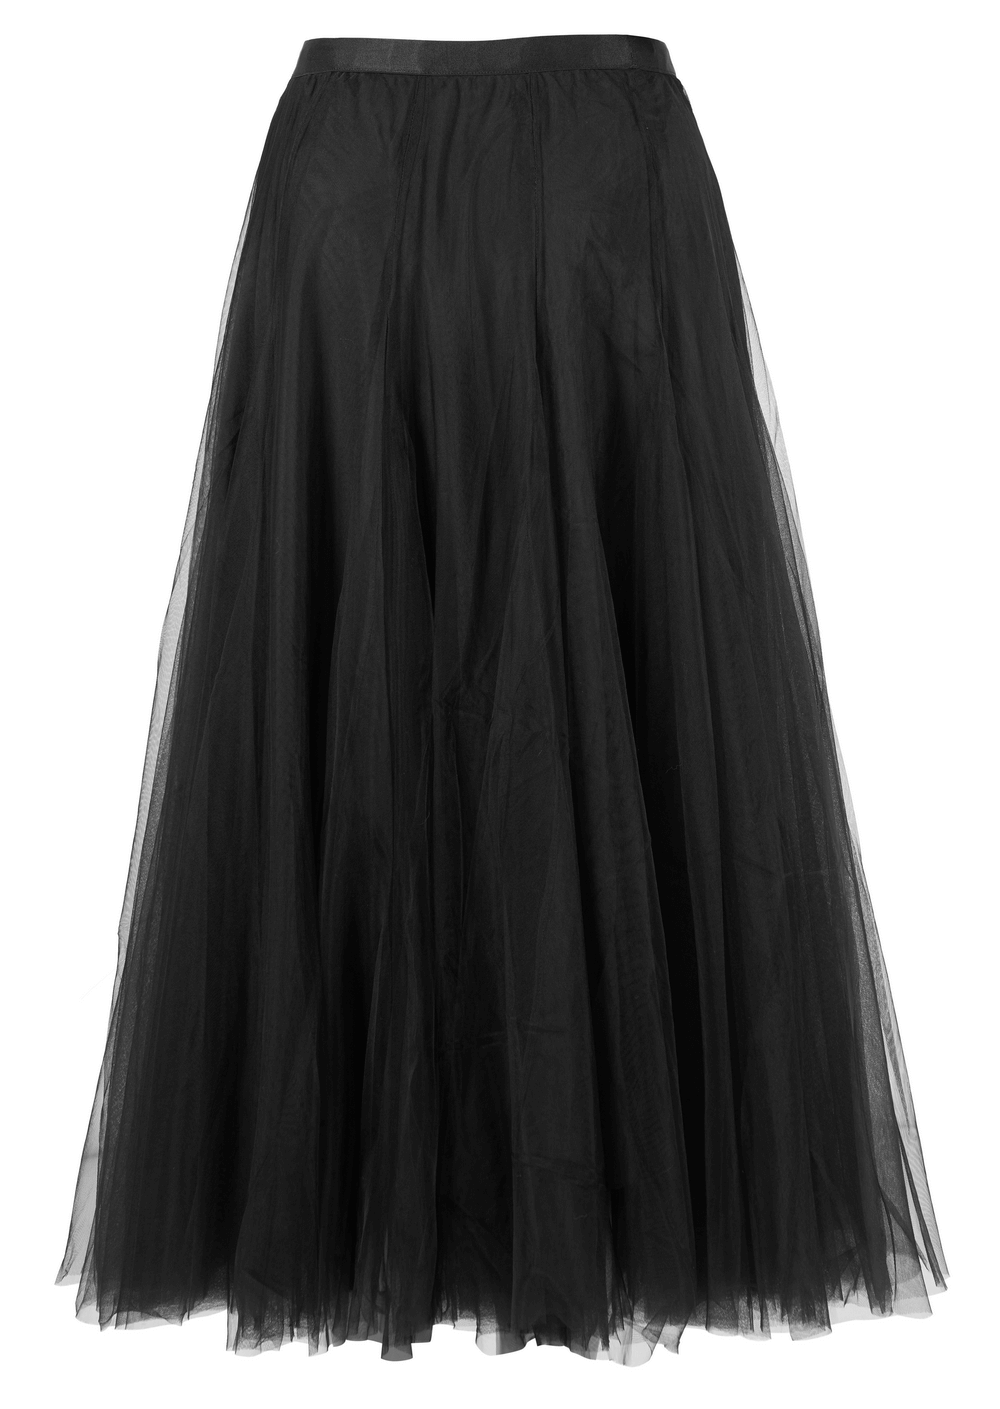 Elegant Black Ballerina Midi Skirt with Elastic Waist